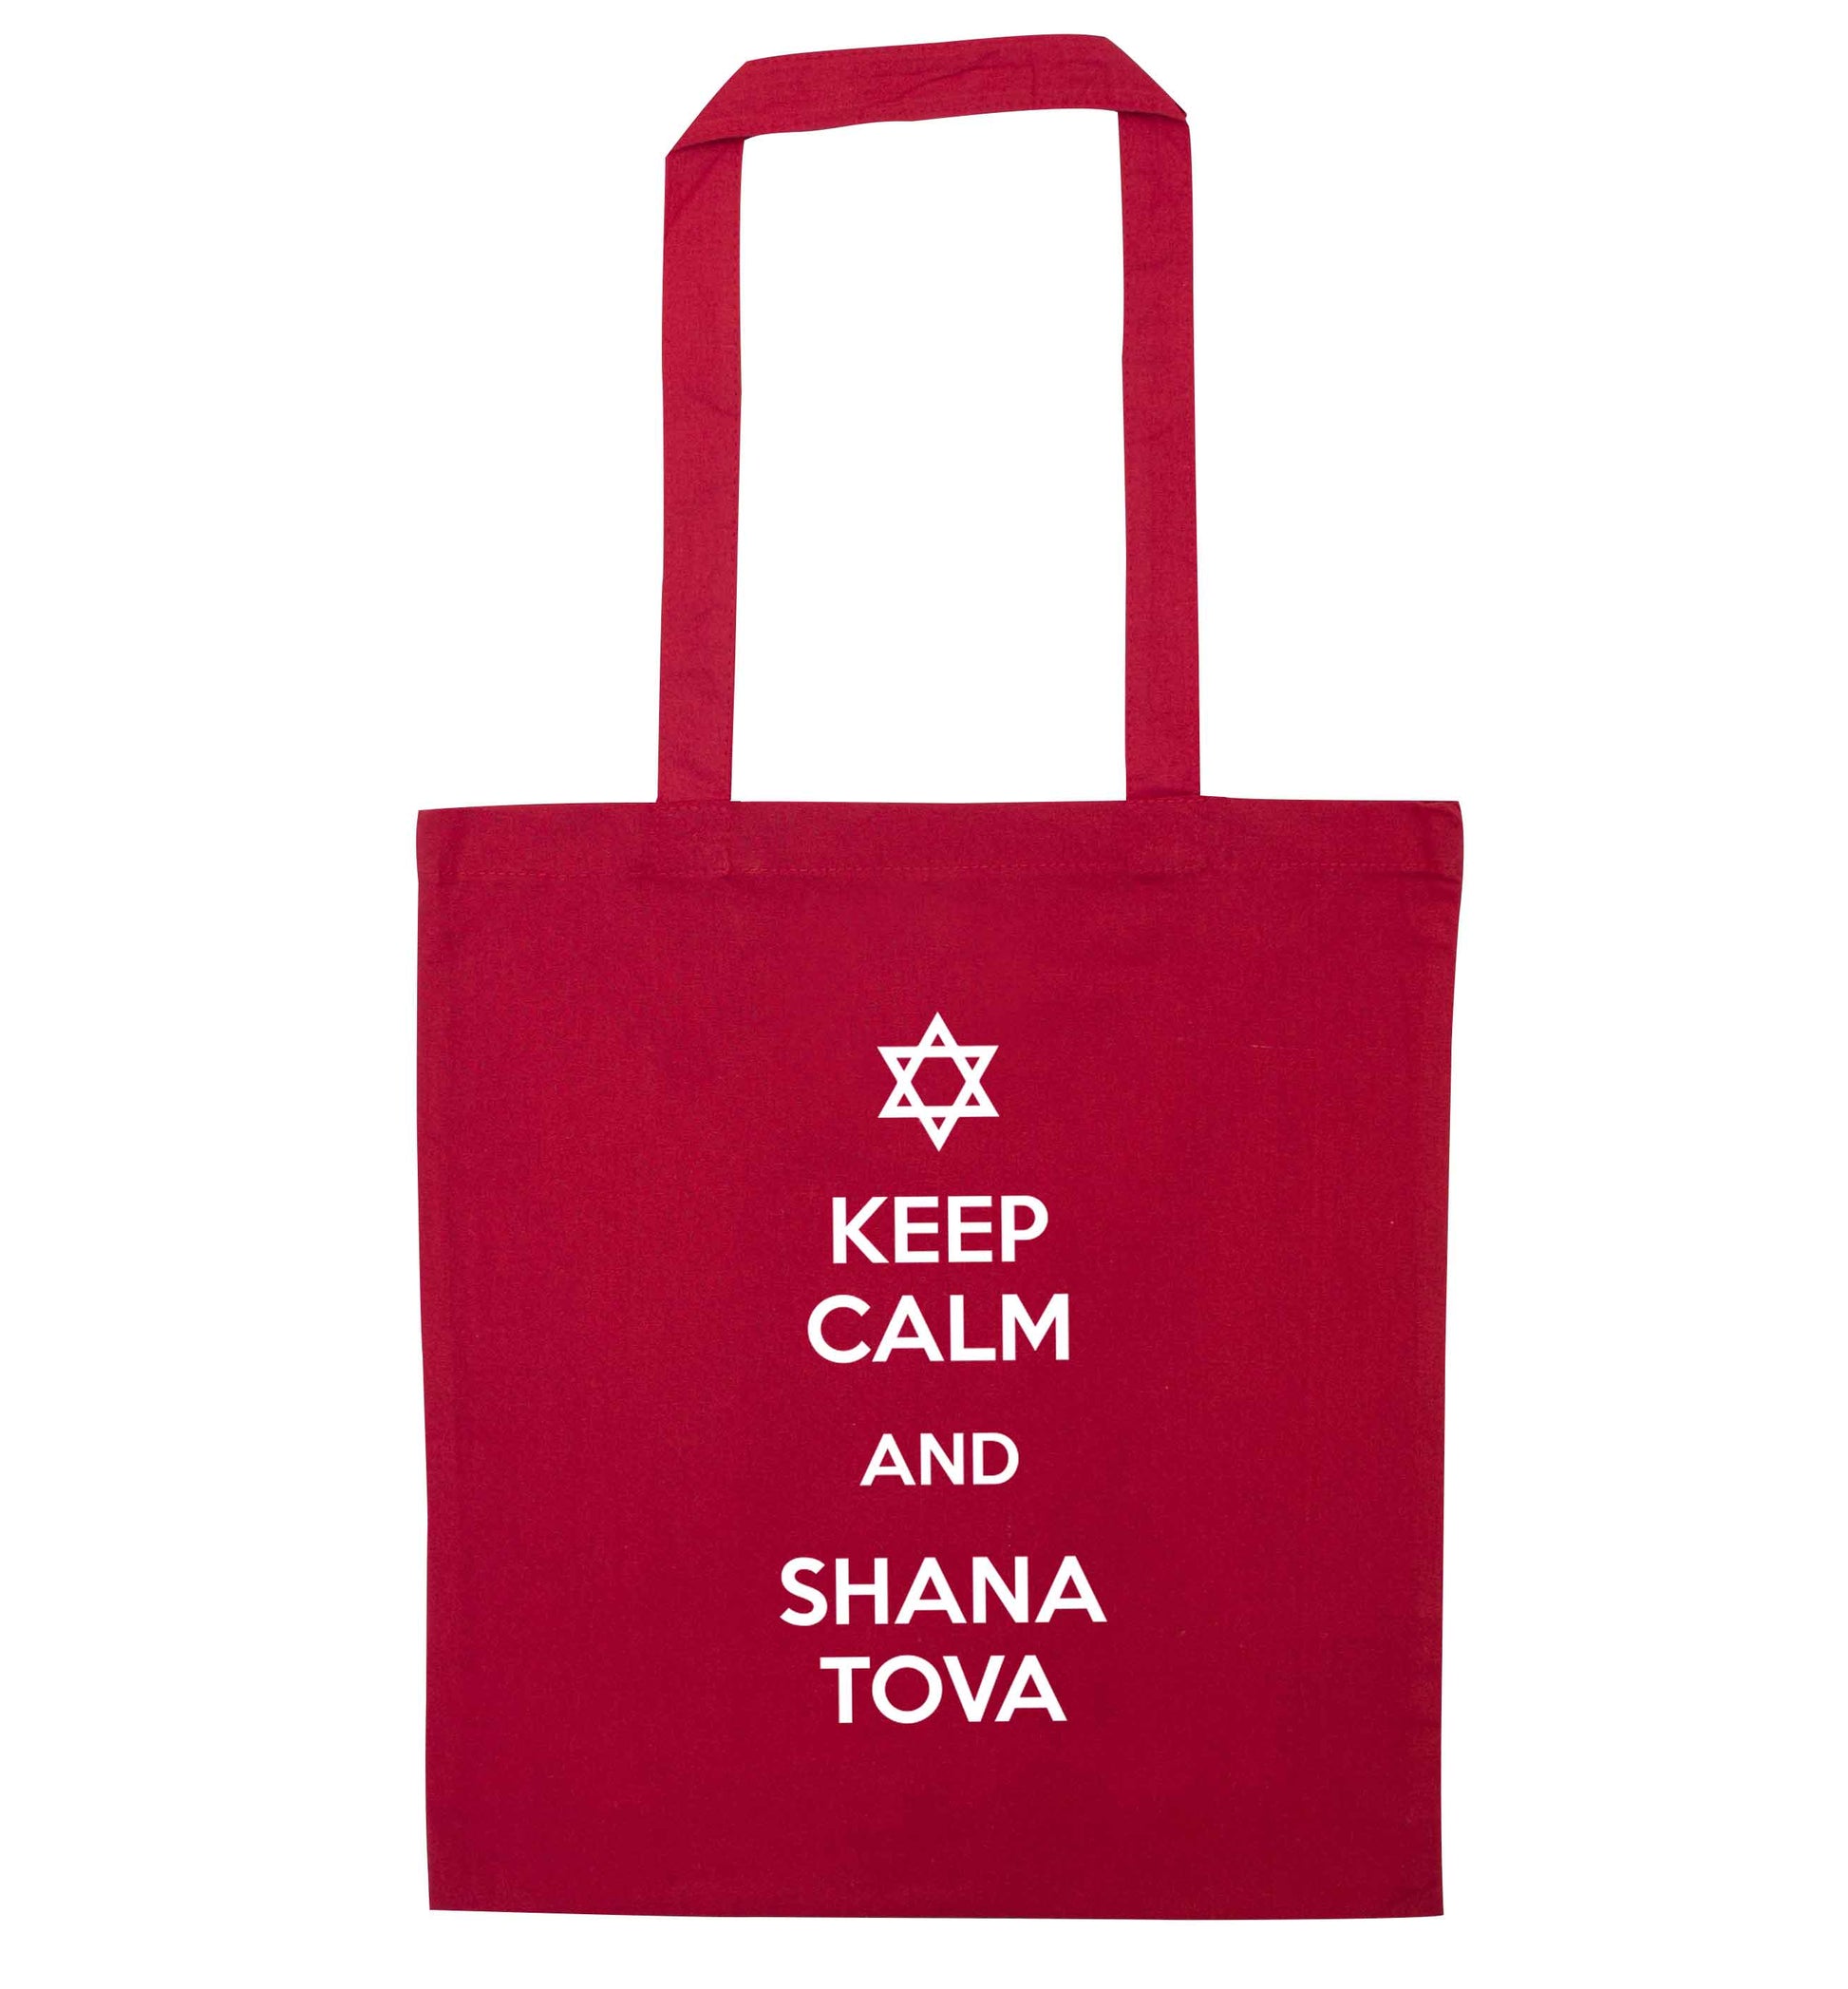 Keep calm and shana tova red tote bag